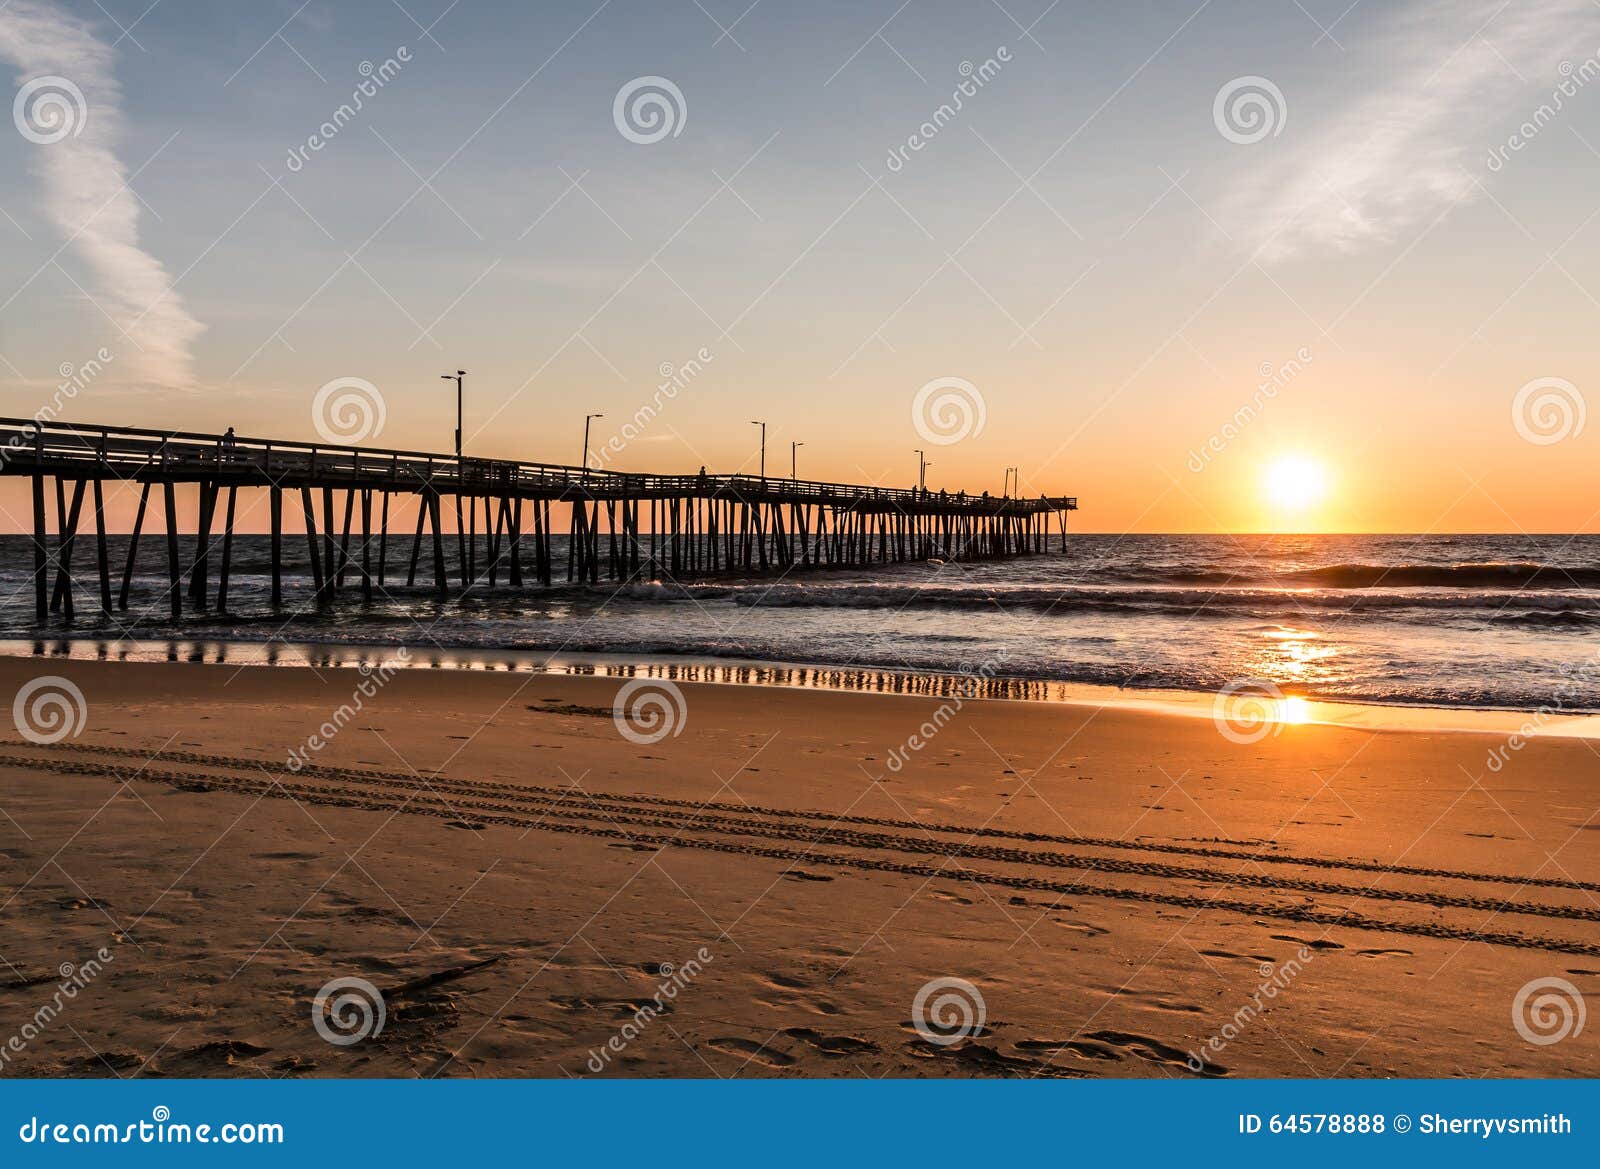 virginia beach boardwalk fishing pier at dawn